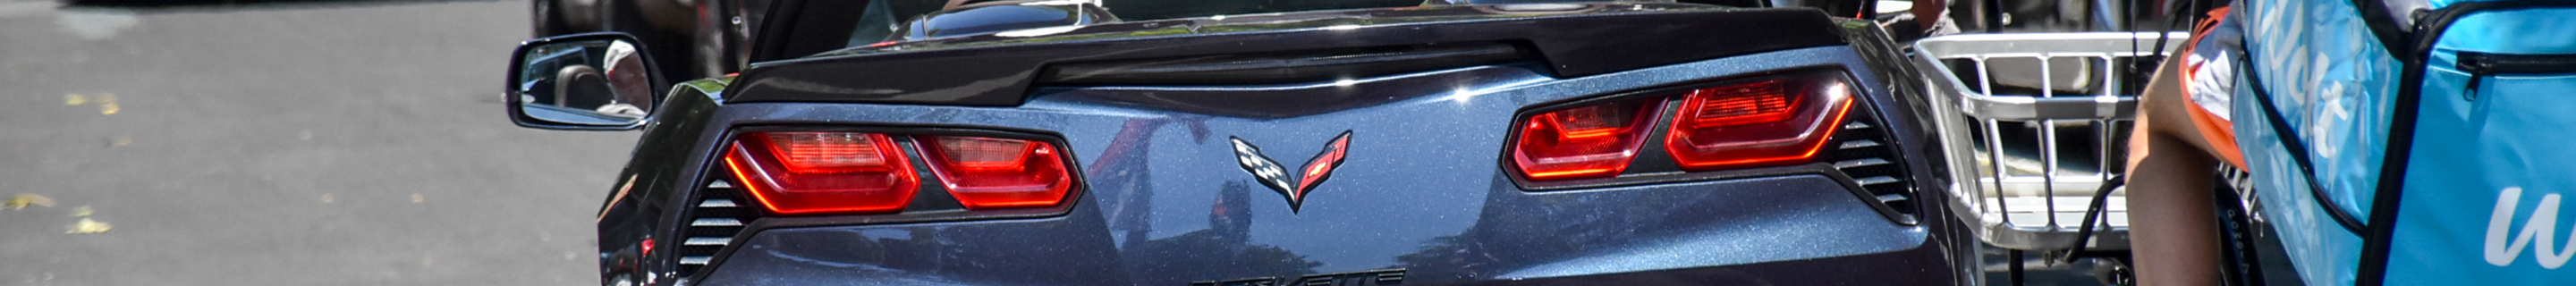 Chevrolet Corvette C7 Stingray Convertible